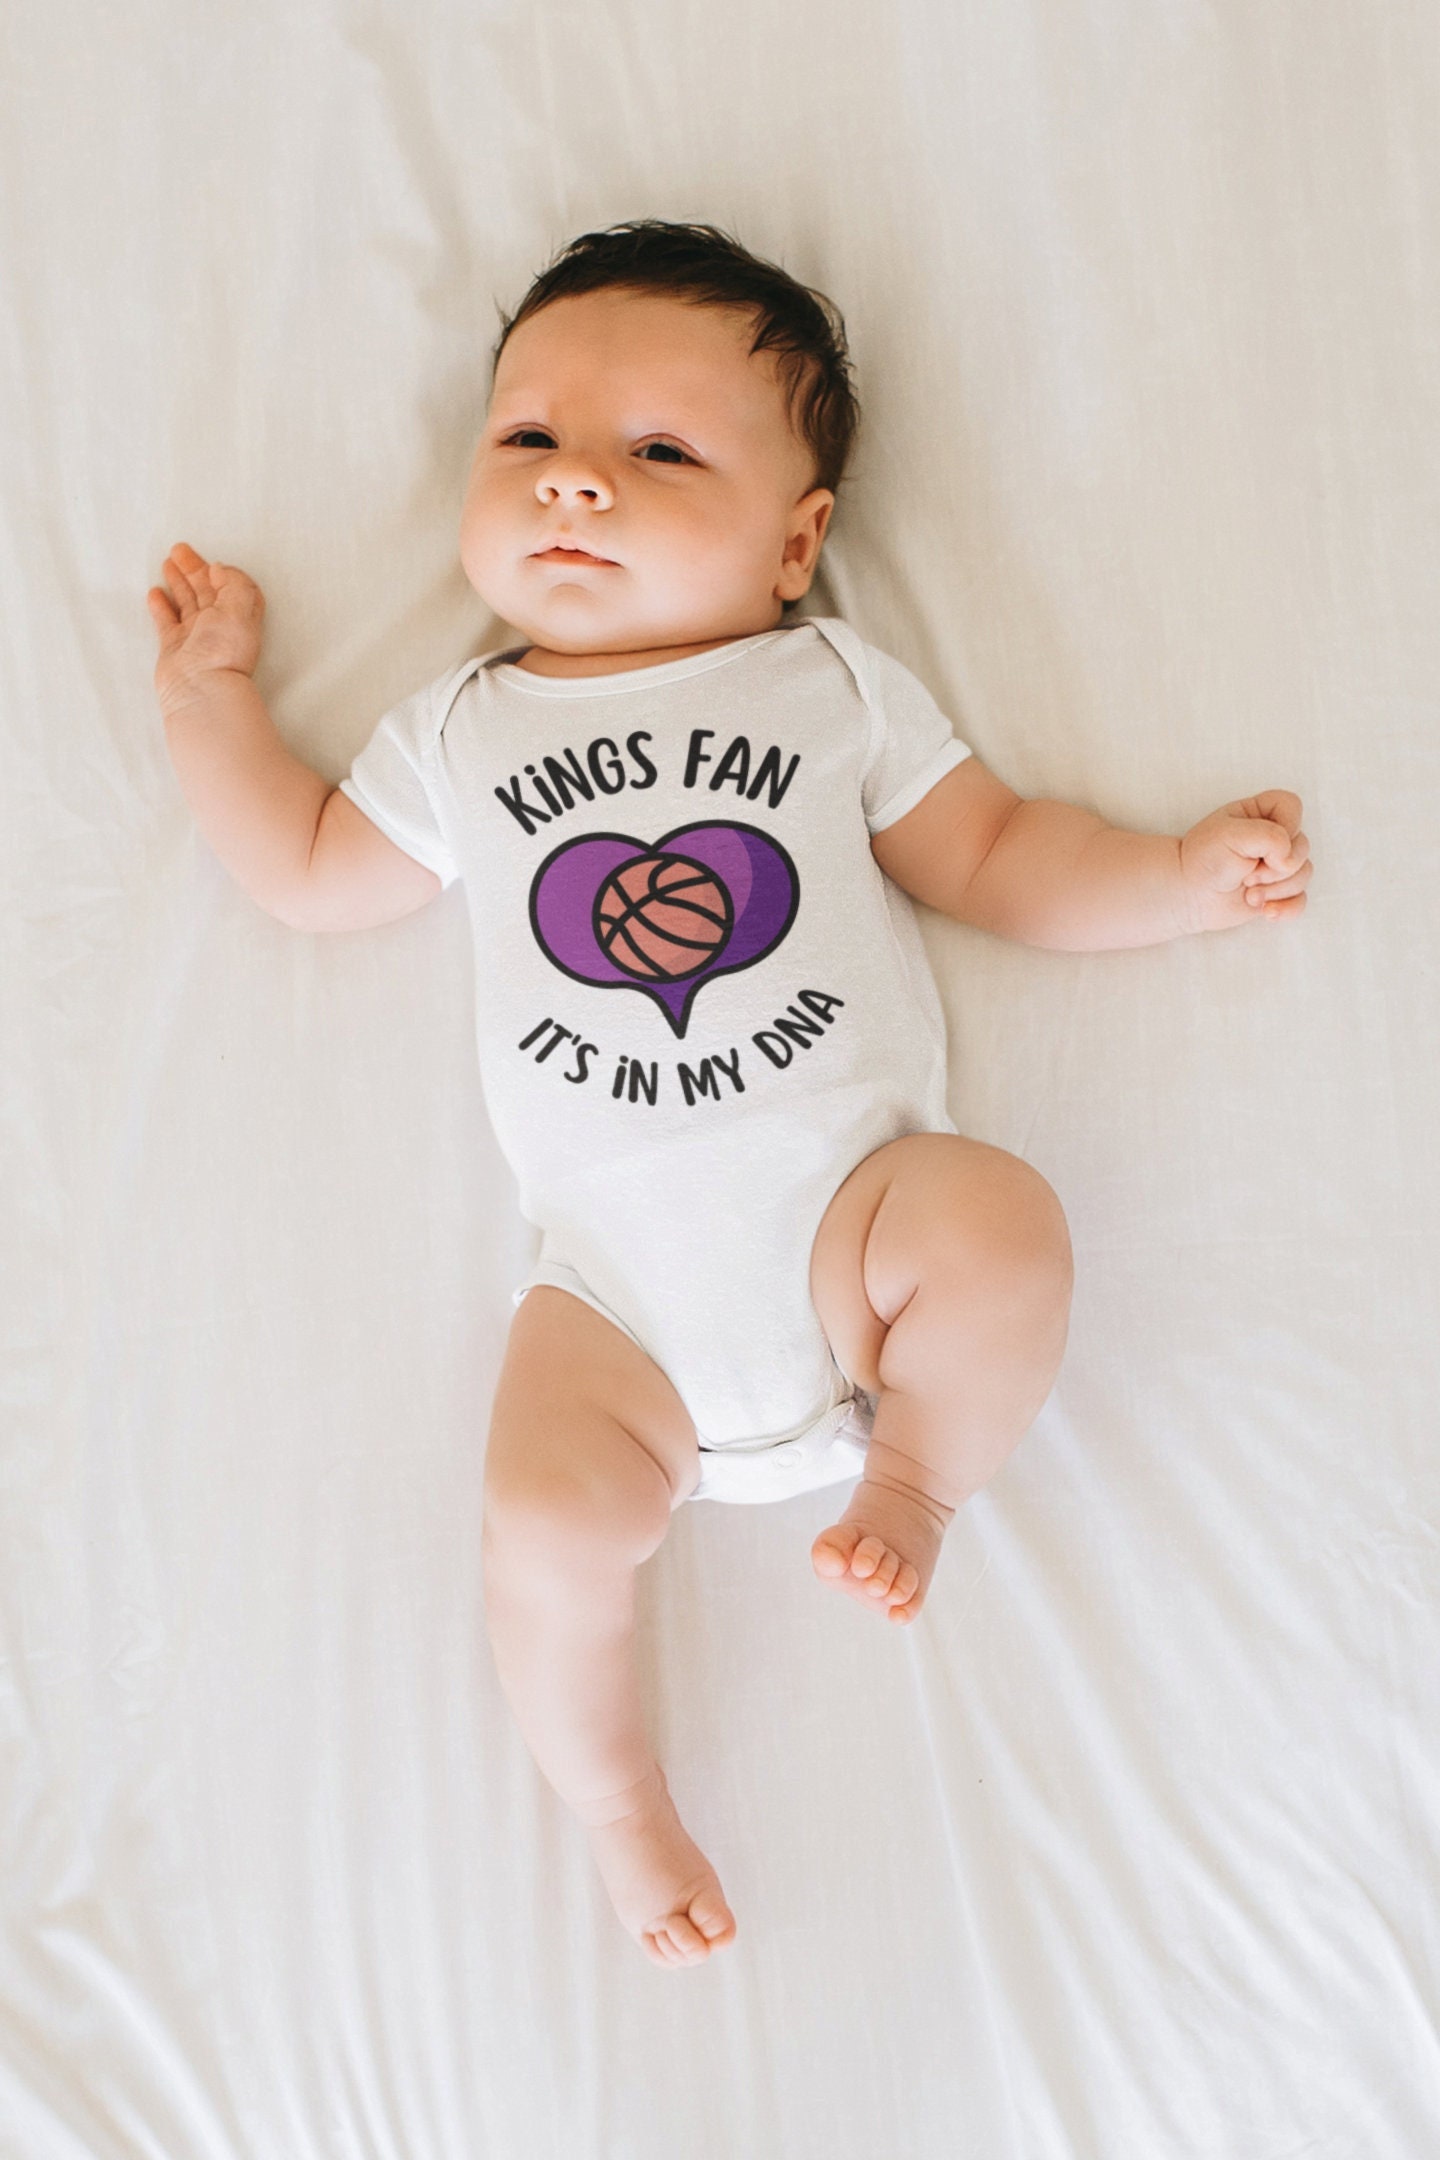 Sacramento Kings Jersey For Babies, Youth, Women, or Men